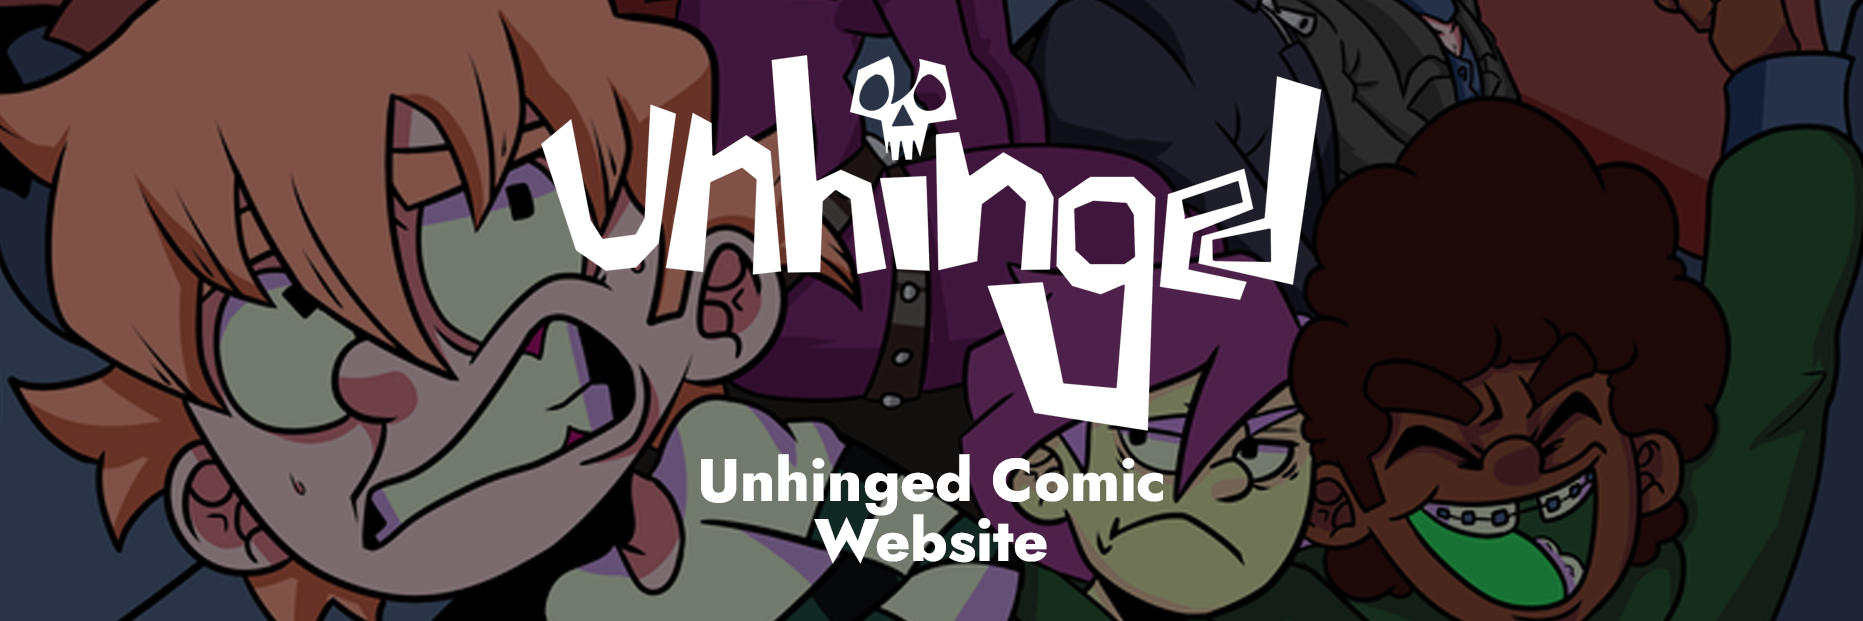 Unhinged Website Banner